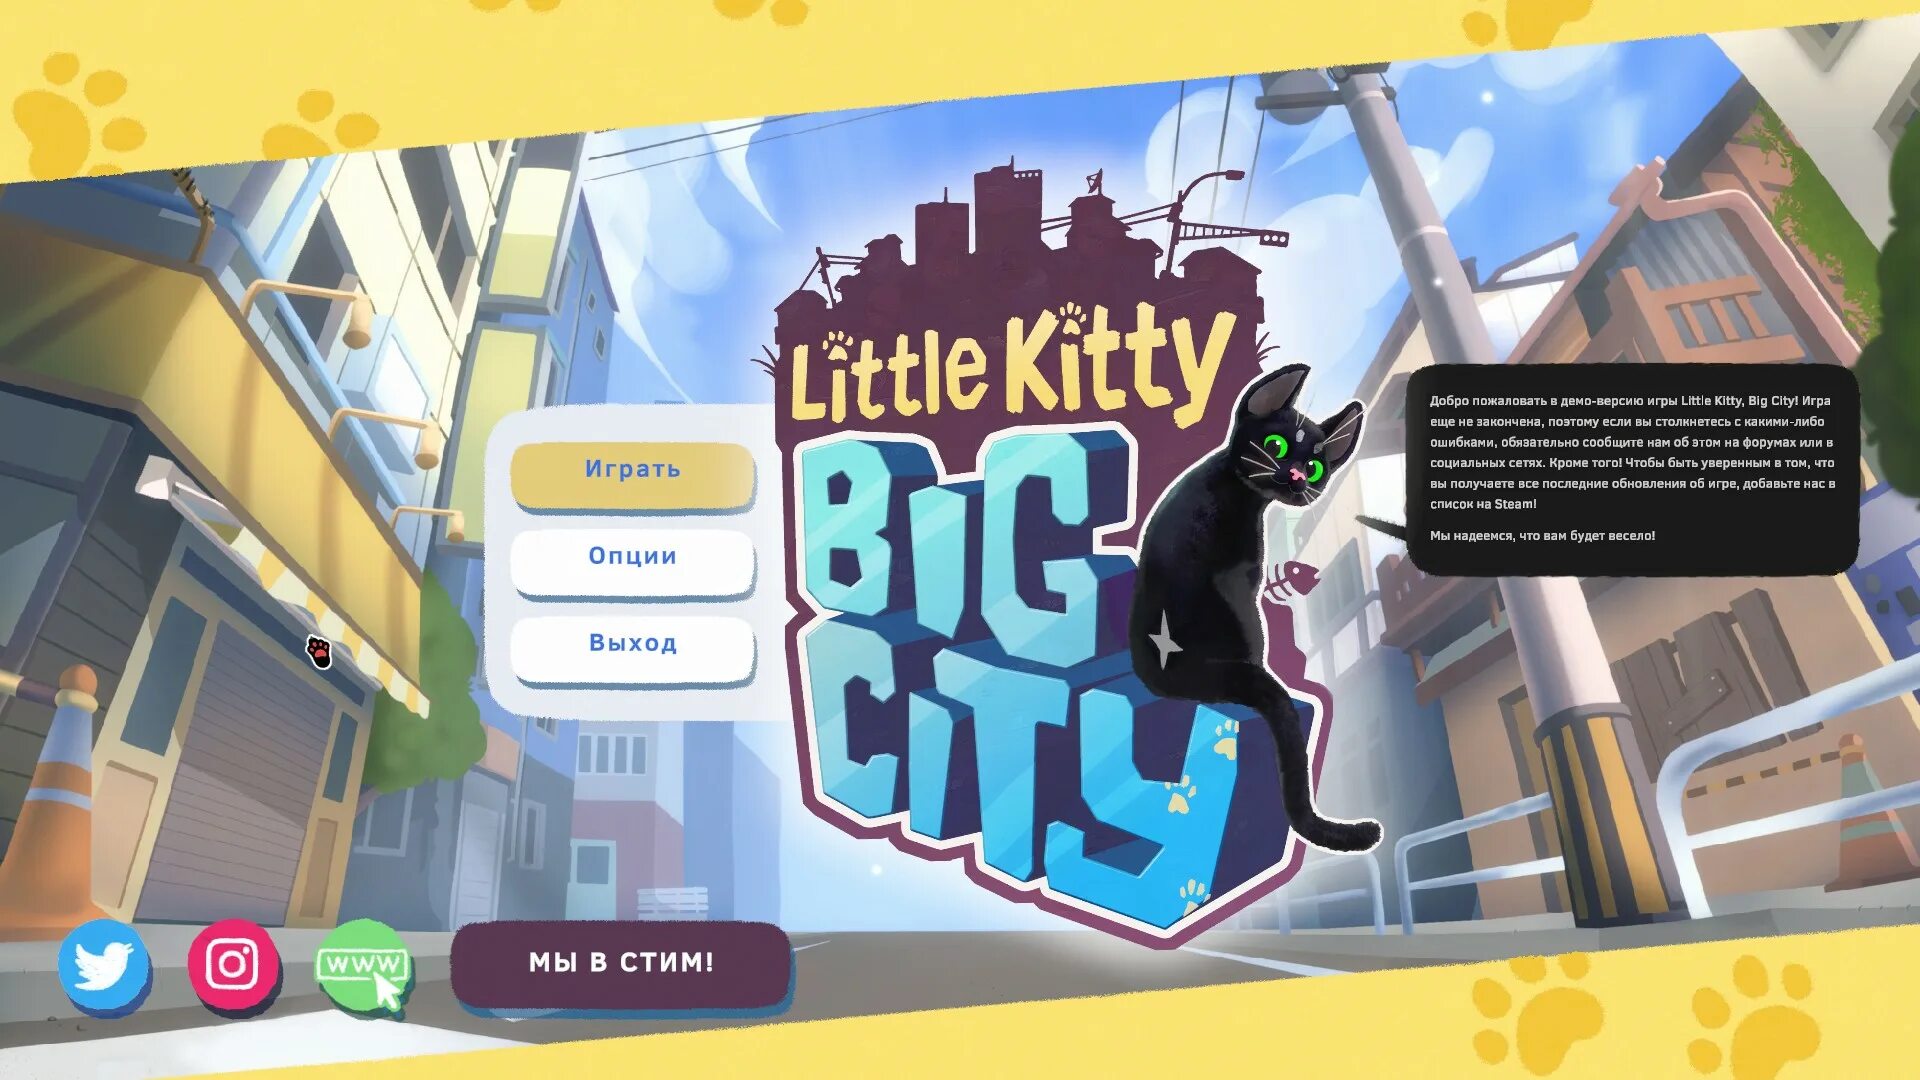 Игра liffle Kitty. Little Kitty, big City. Little Kitty big City симулятор кота. Игра little Kitty big City на ПС 5. Demo русский язык